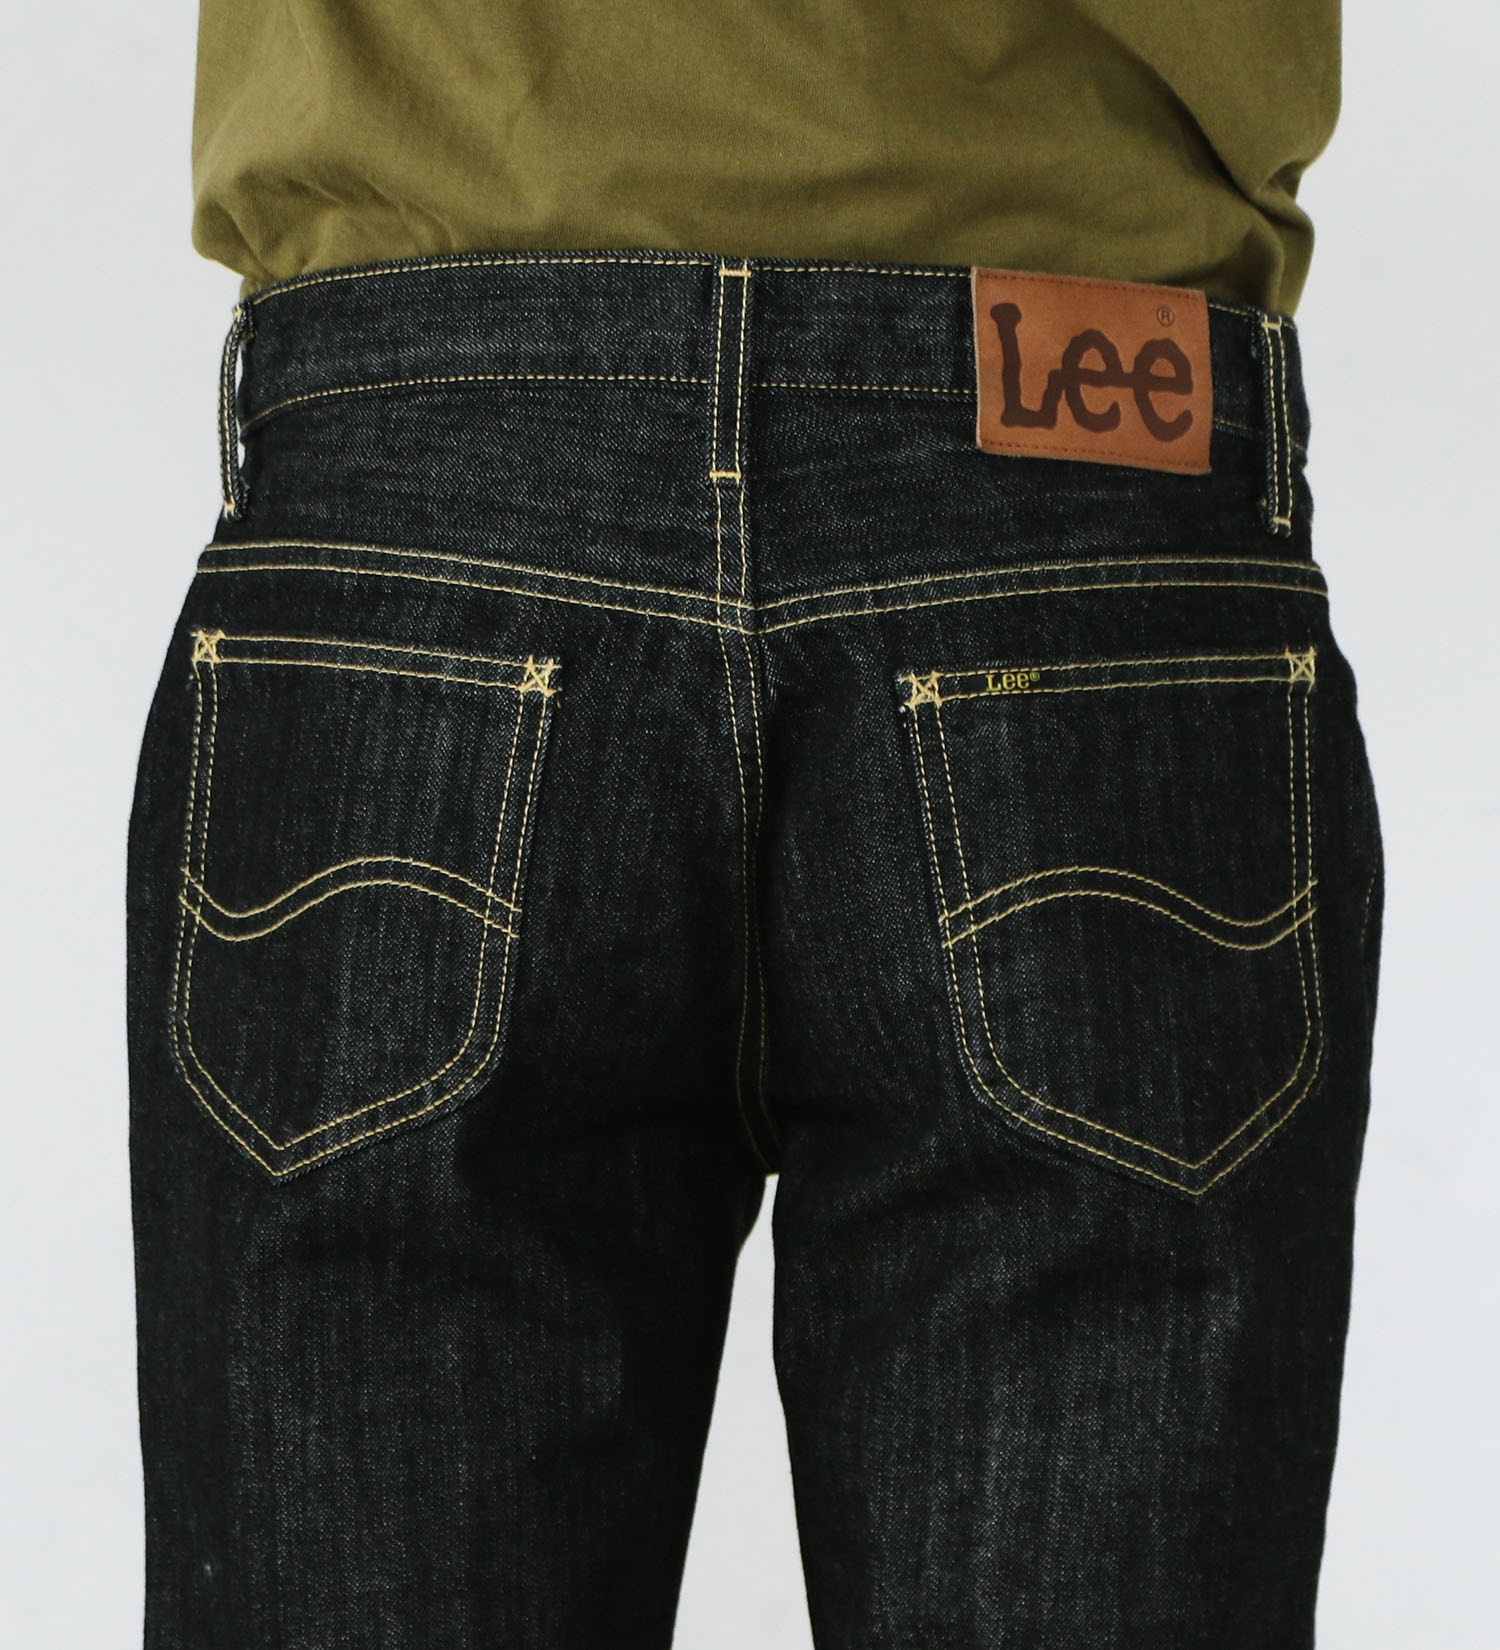 Lee(リー)のAMERICAN STANDARD 202ベルボトムジーンズ|パンツ/デニムパンツ/メンズ|ブラックデニム